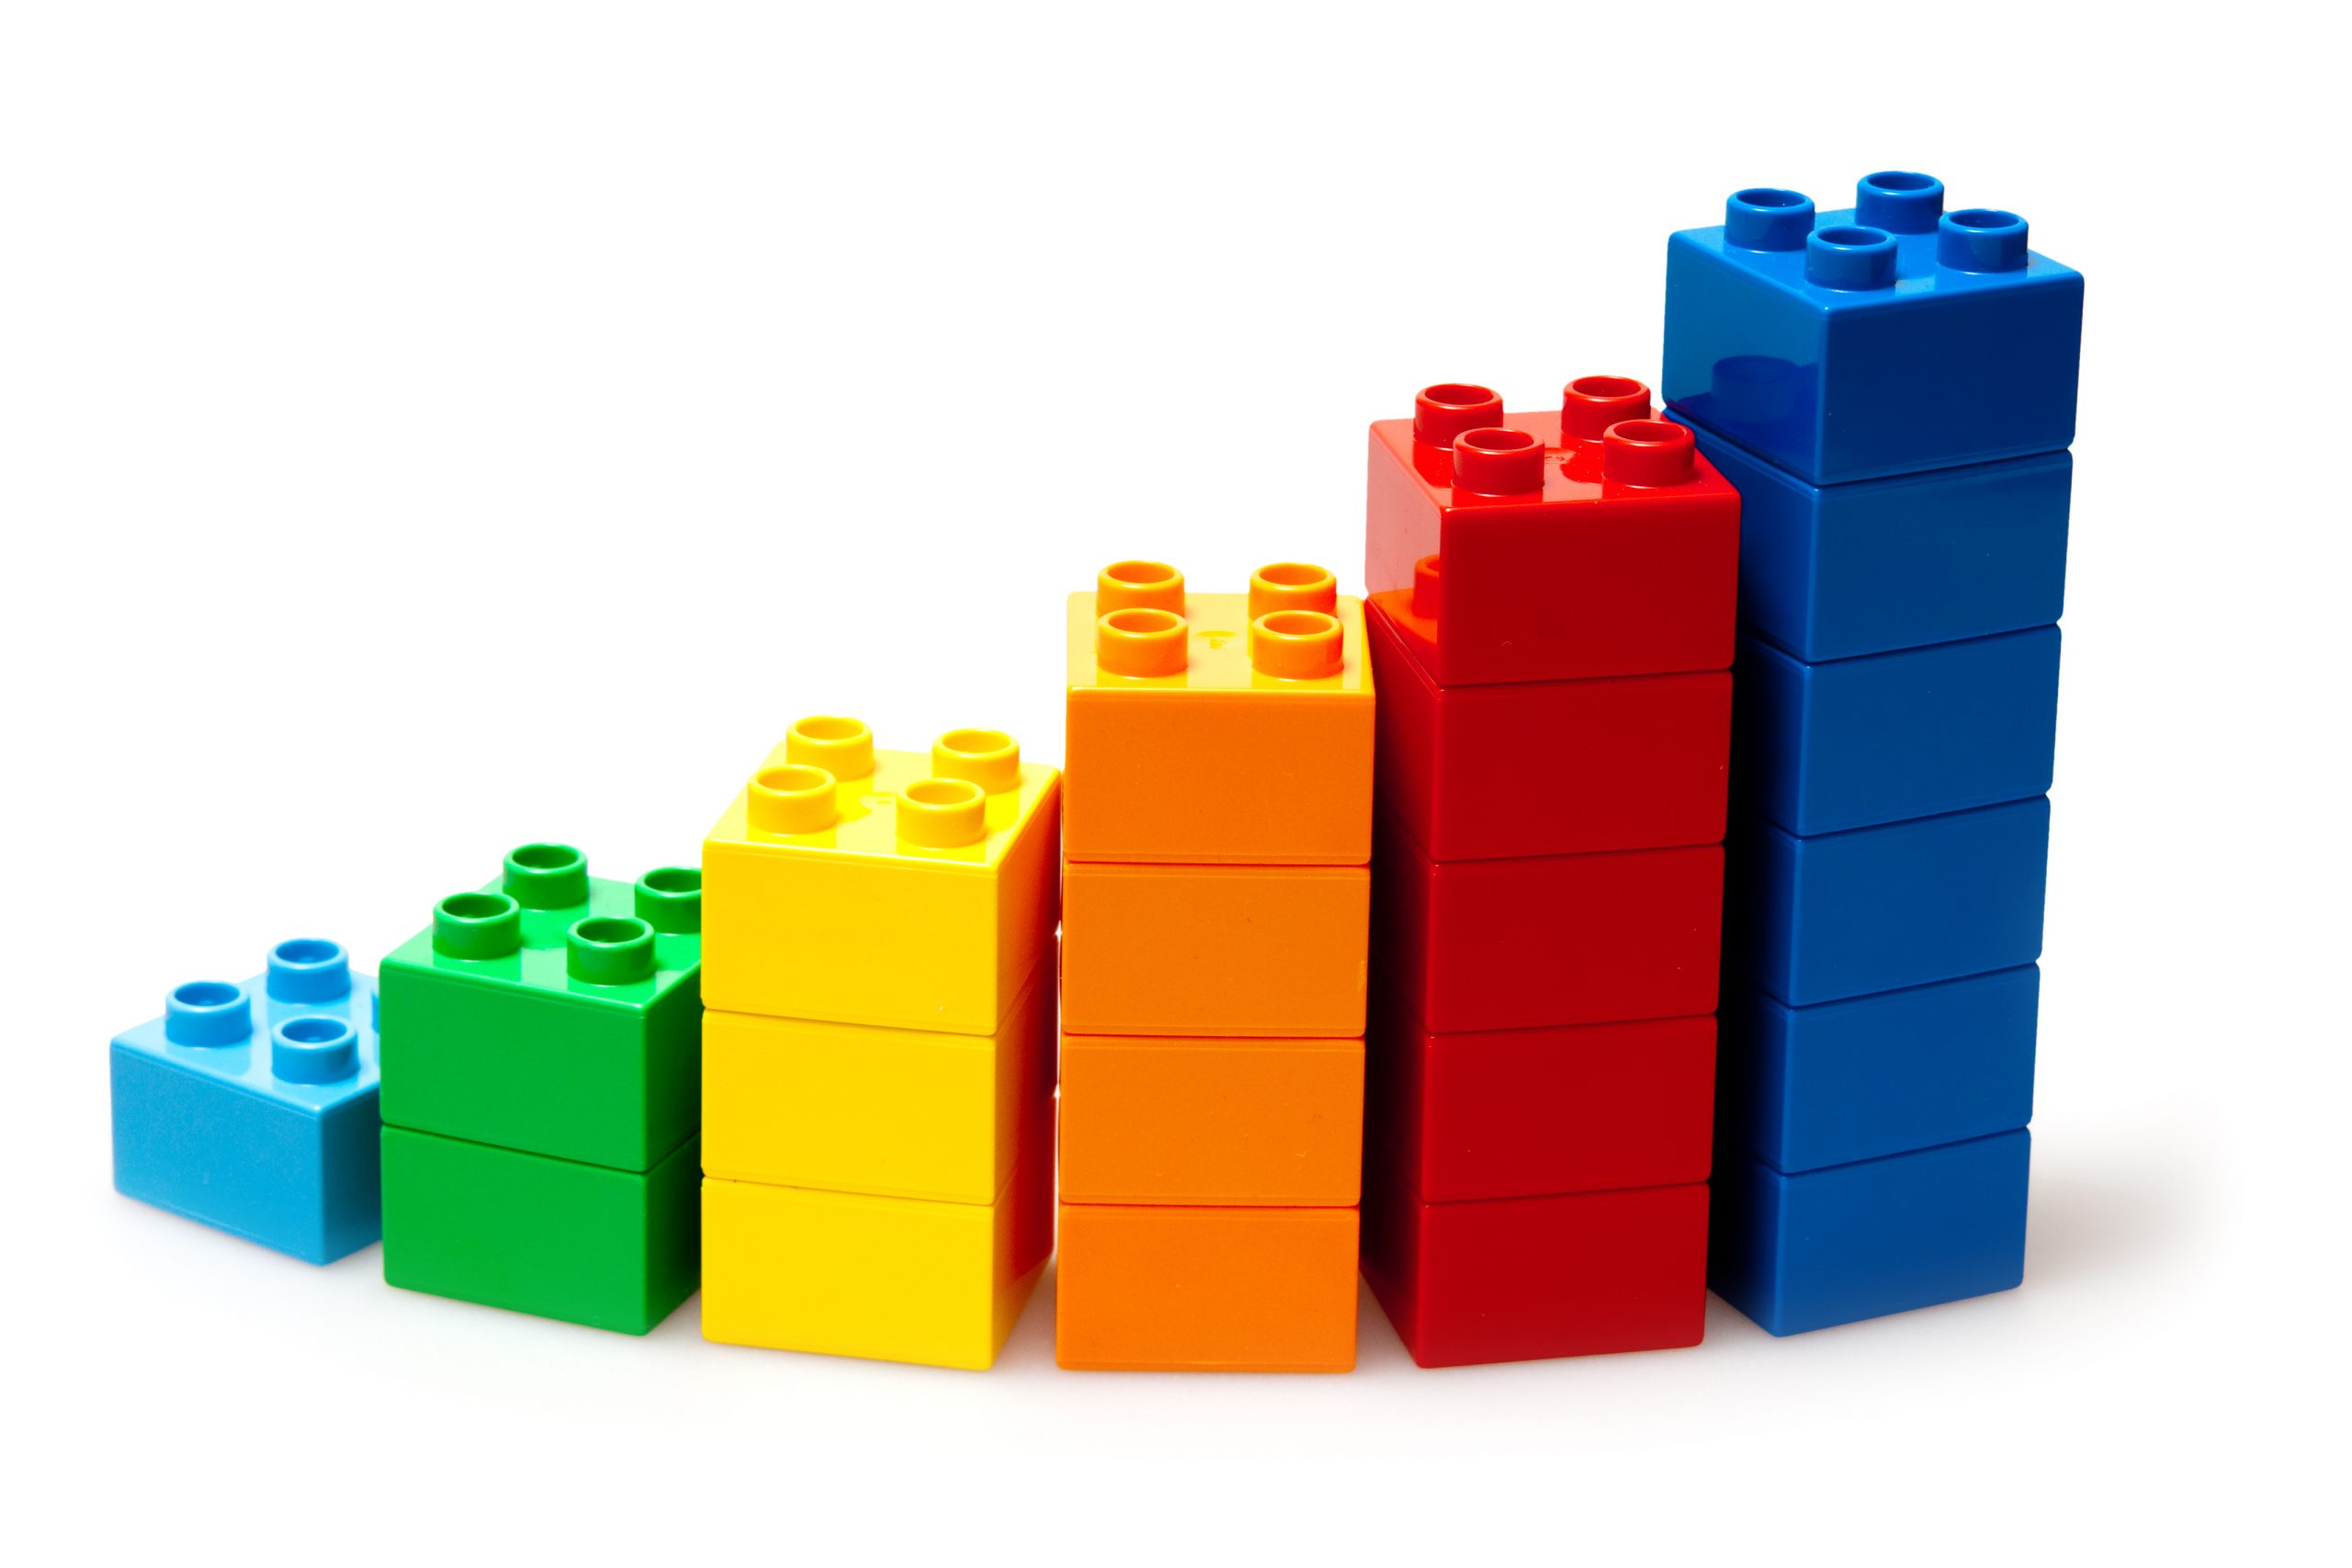  Building blocks